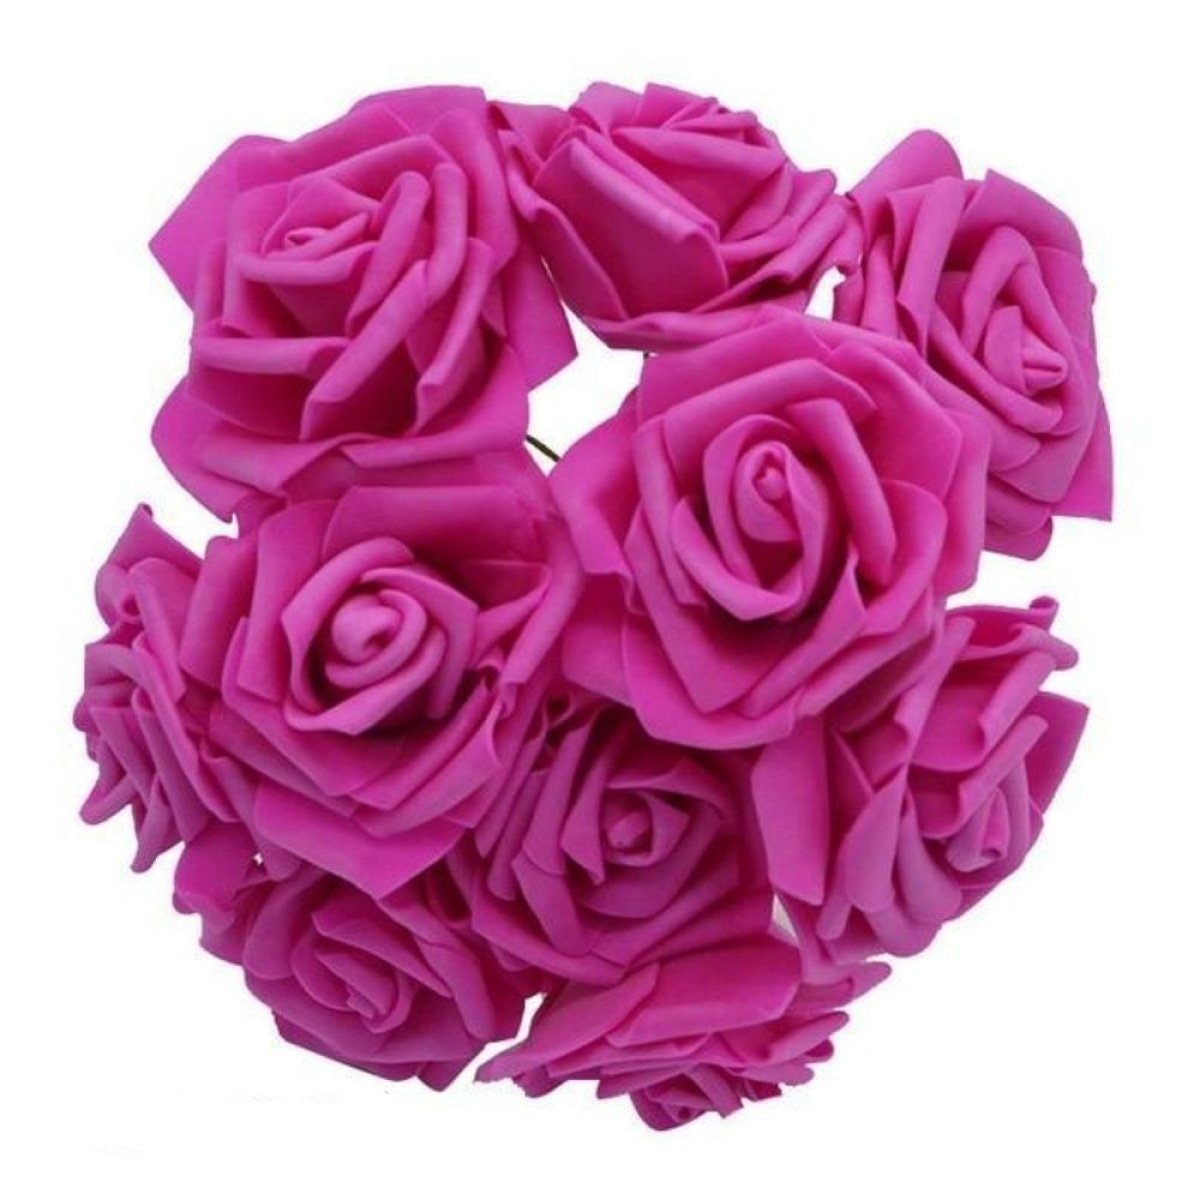 10-100pcs 8cm Artificial Flowers Foam Rose Fake Bride Bouquet Wedding - 10 - Rose Red / Dark Pink - Asia Sell